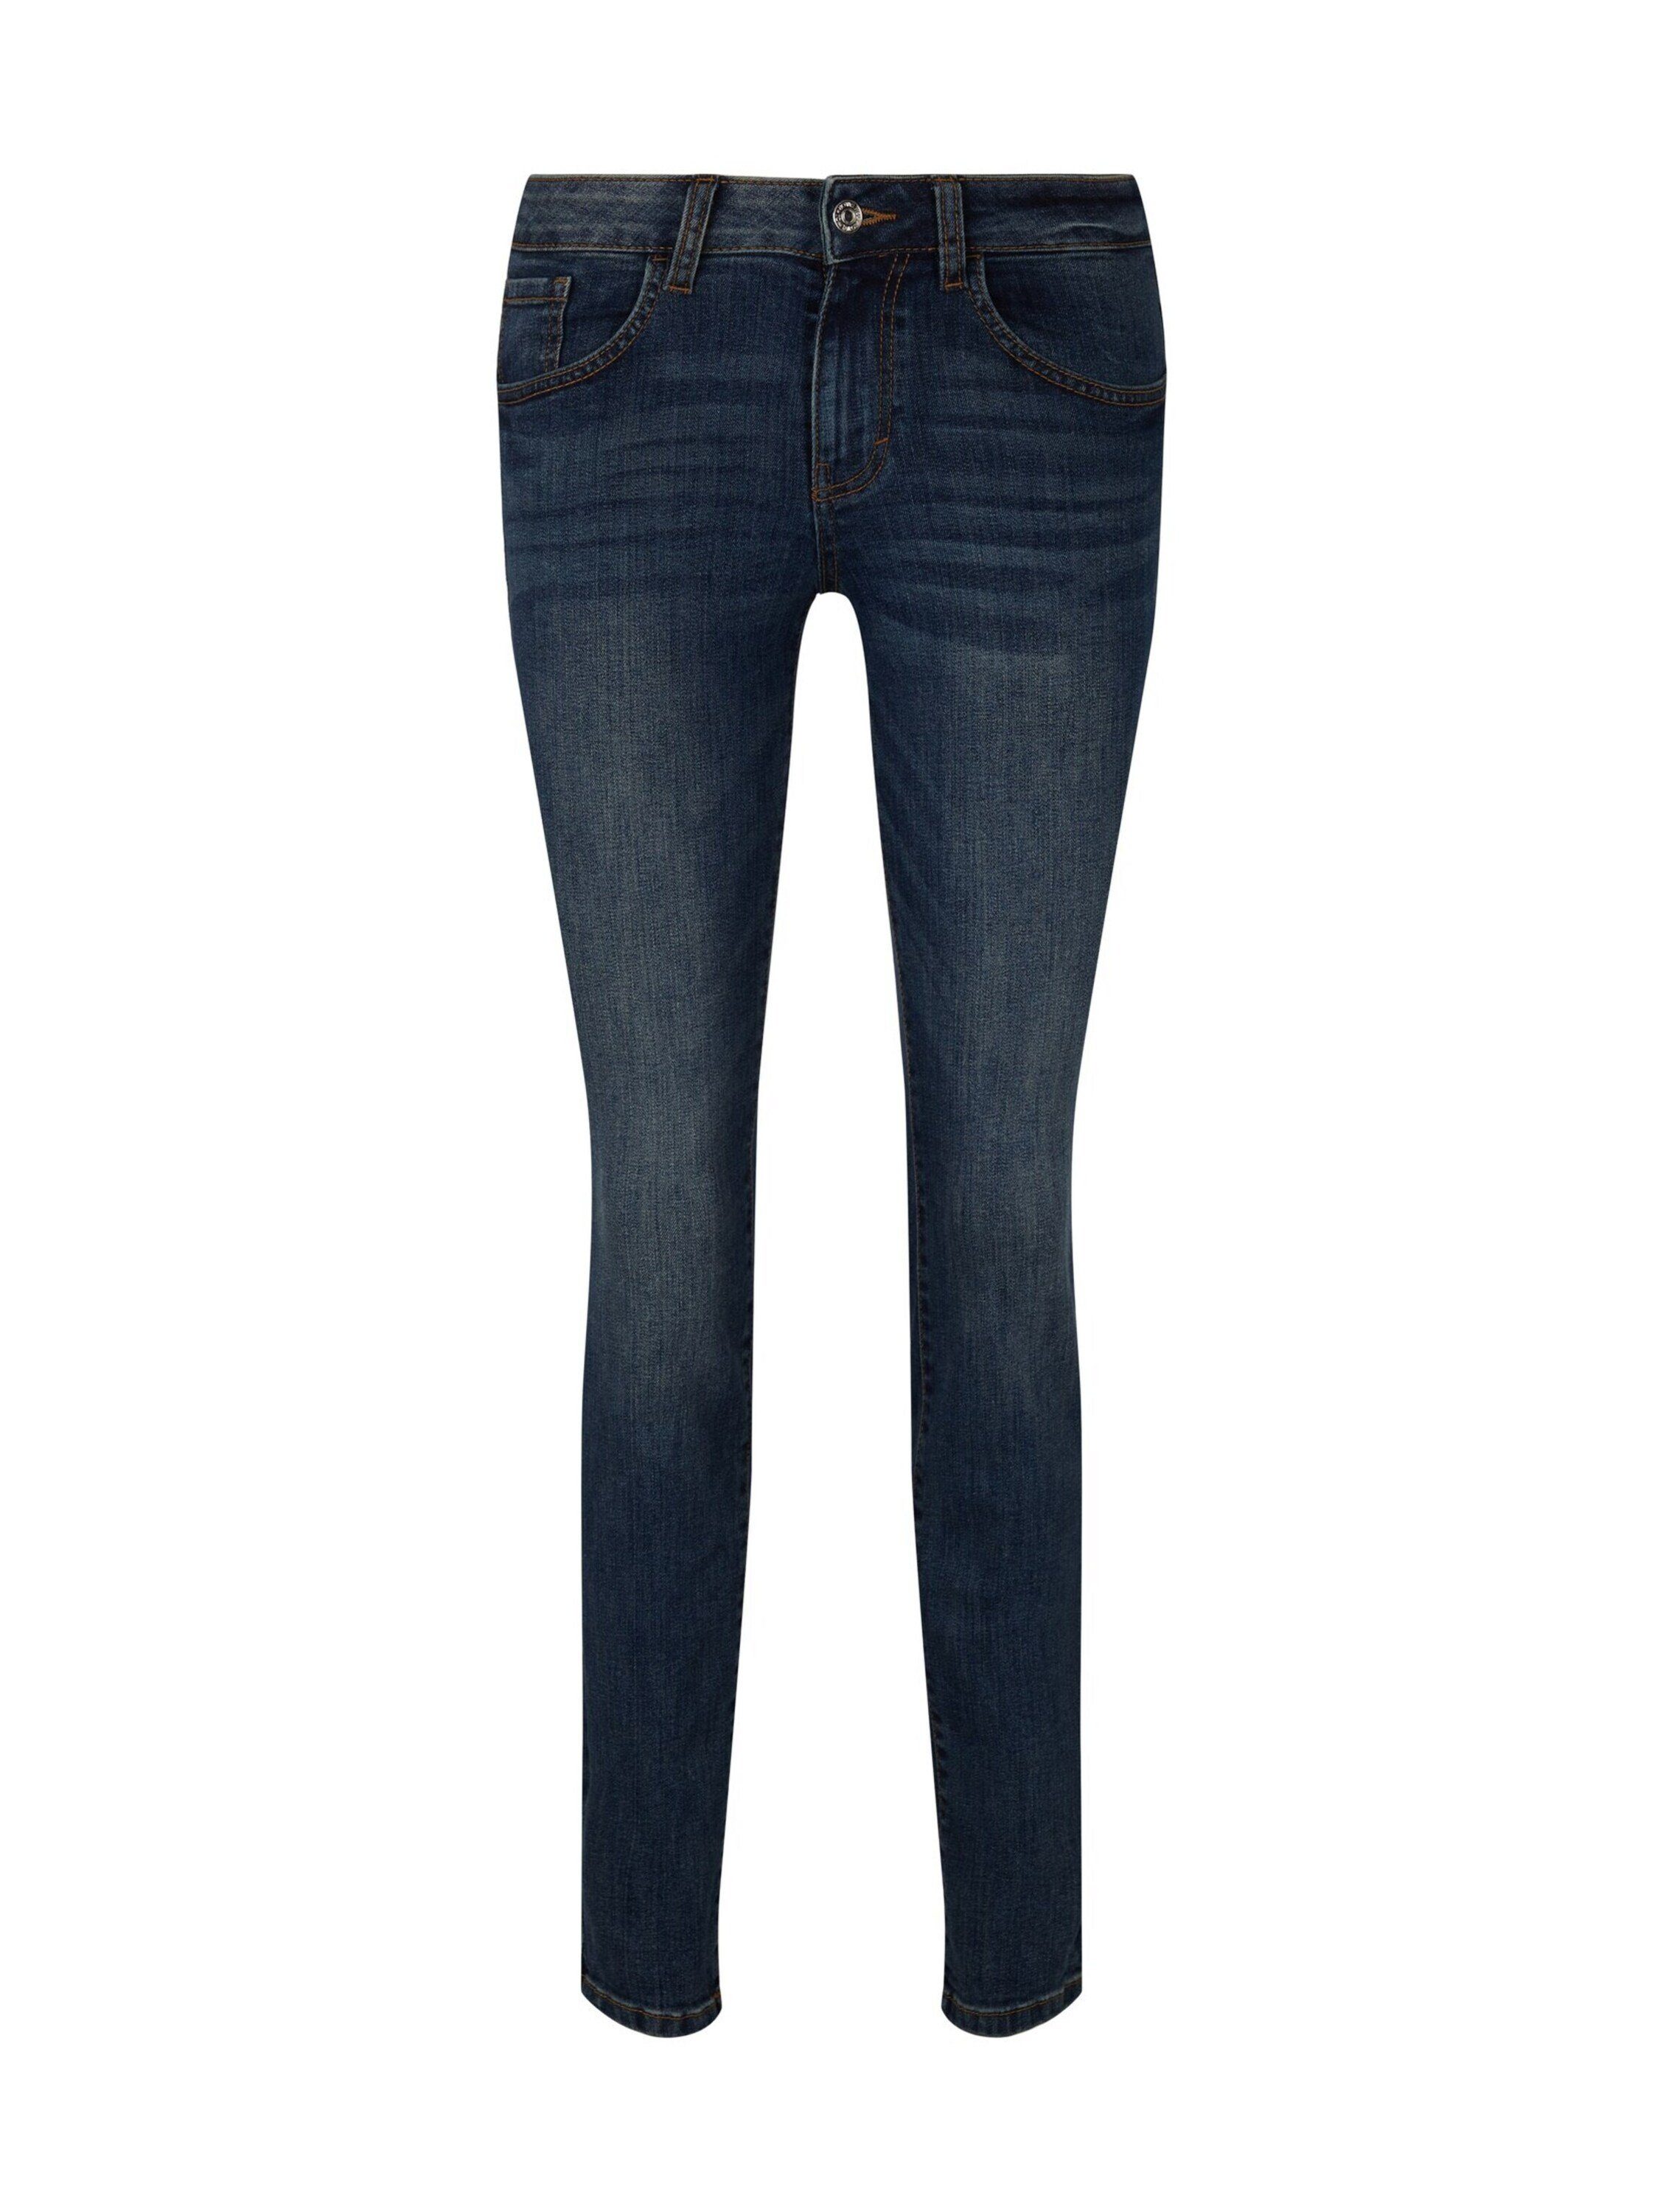 Weiteres Details Plain/ohne (1-tlg) TOM 7/8-Jeans TAILOR Alexa Detail,